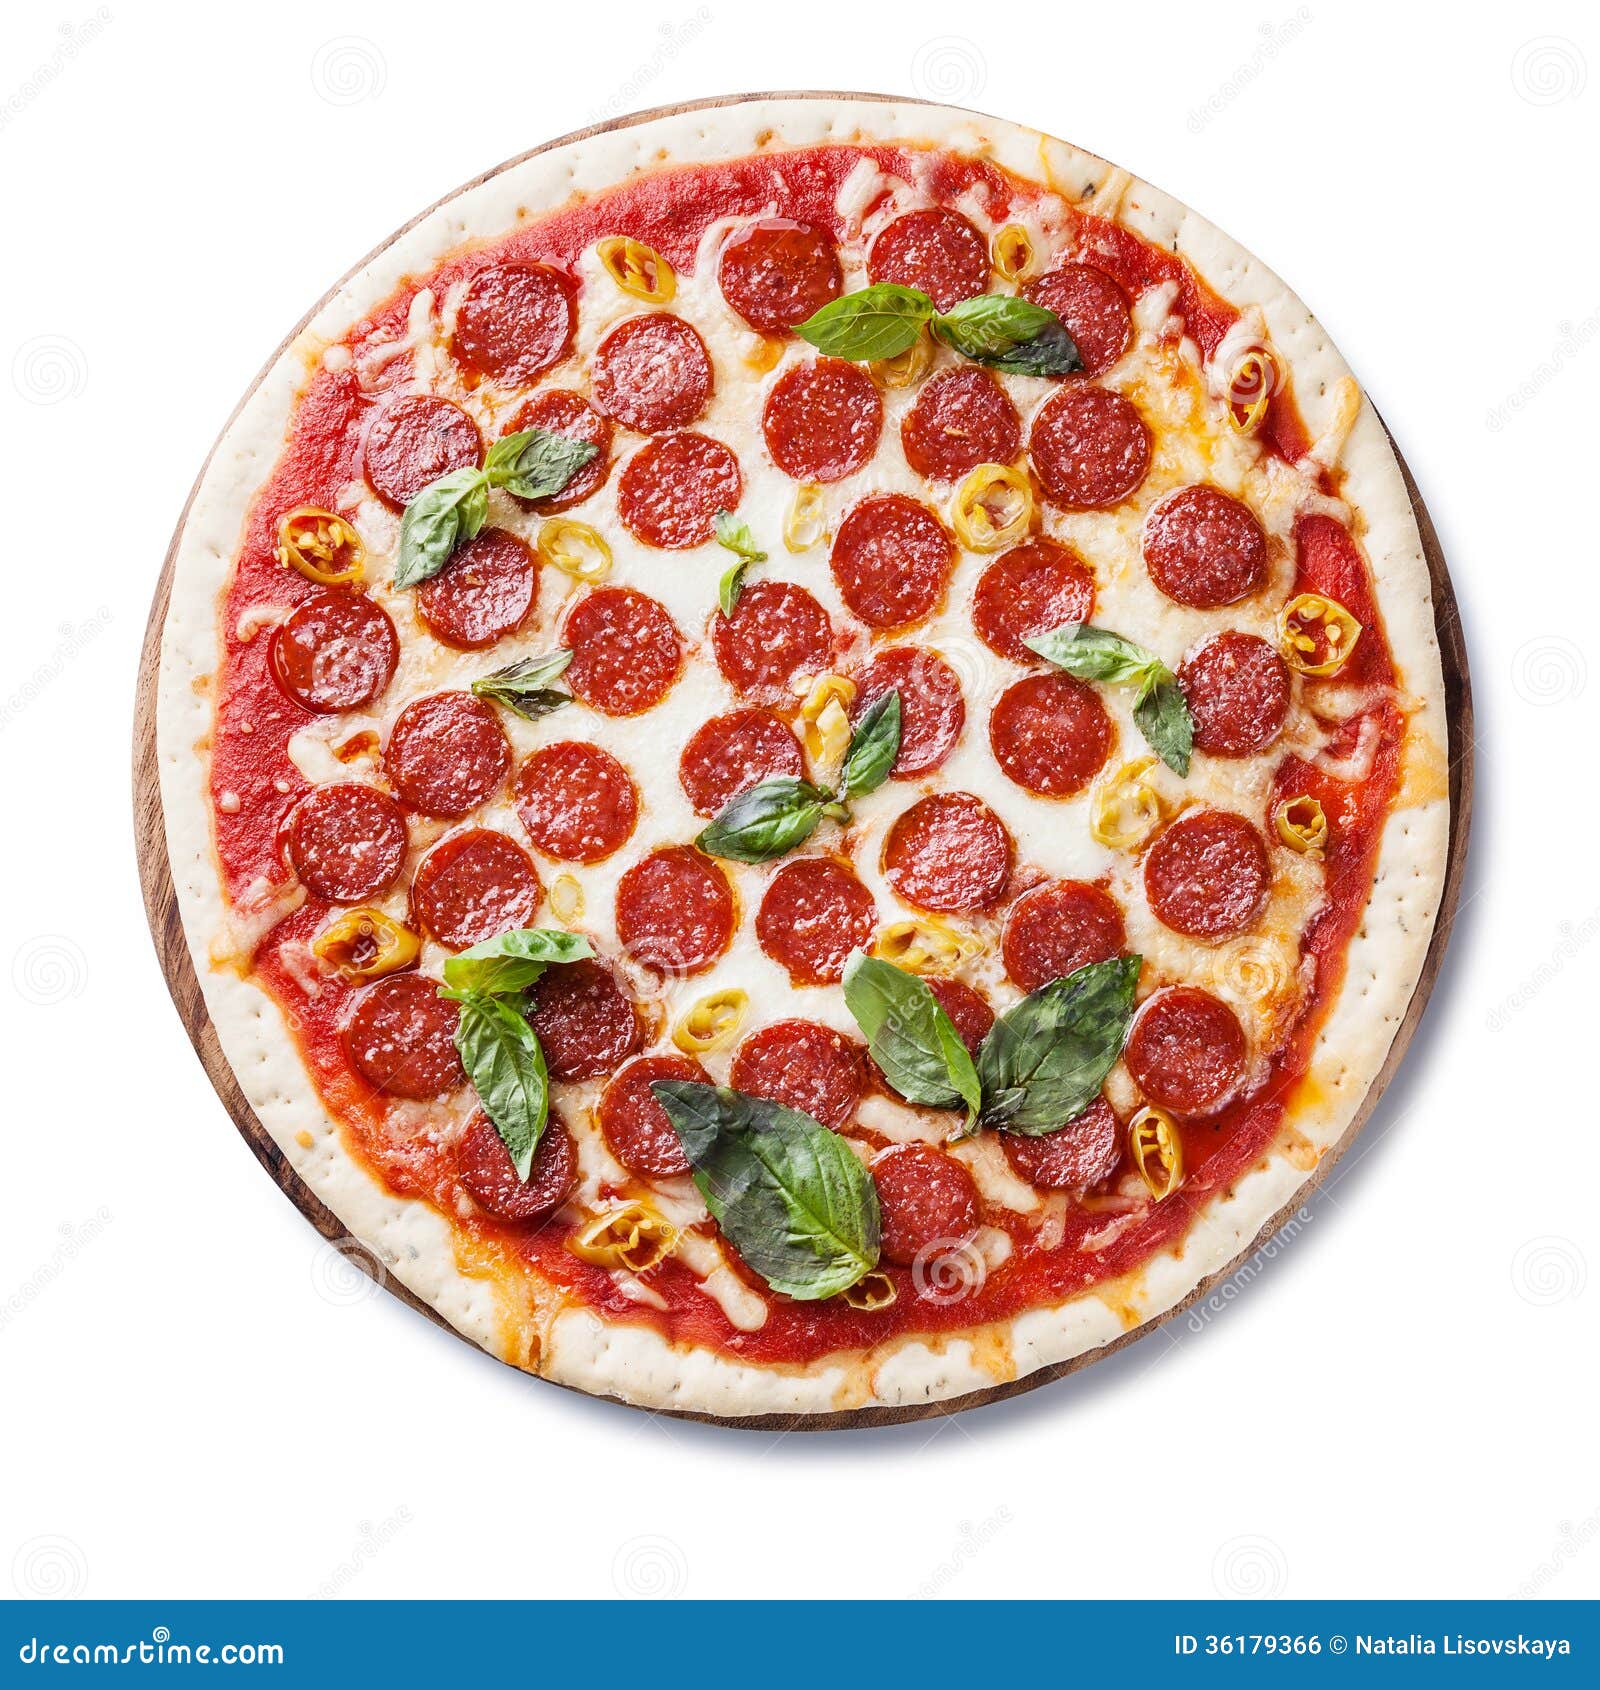 фото пепперони пицца на белом фоне фото 34